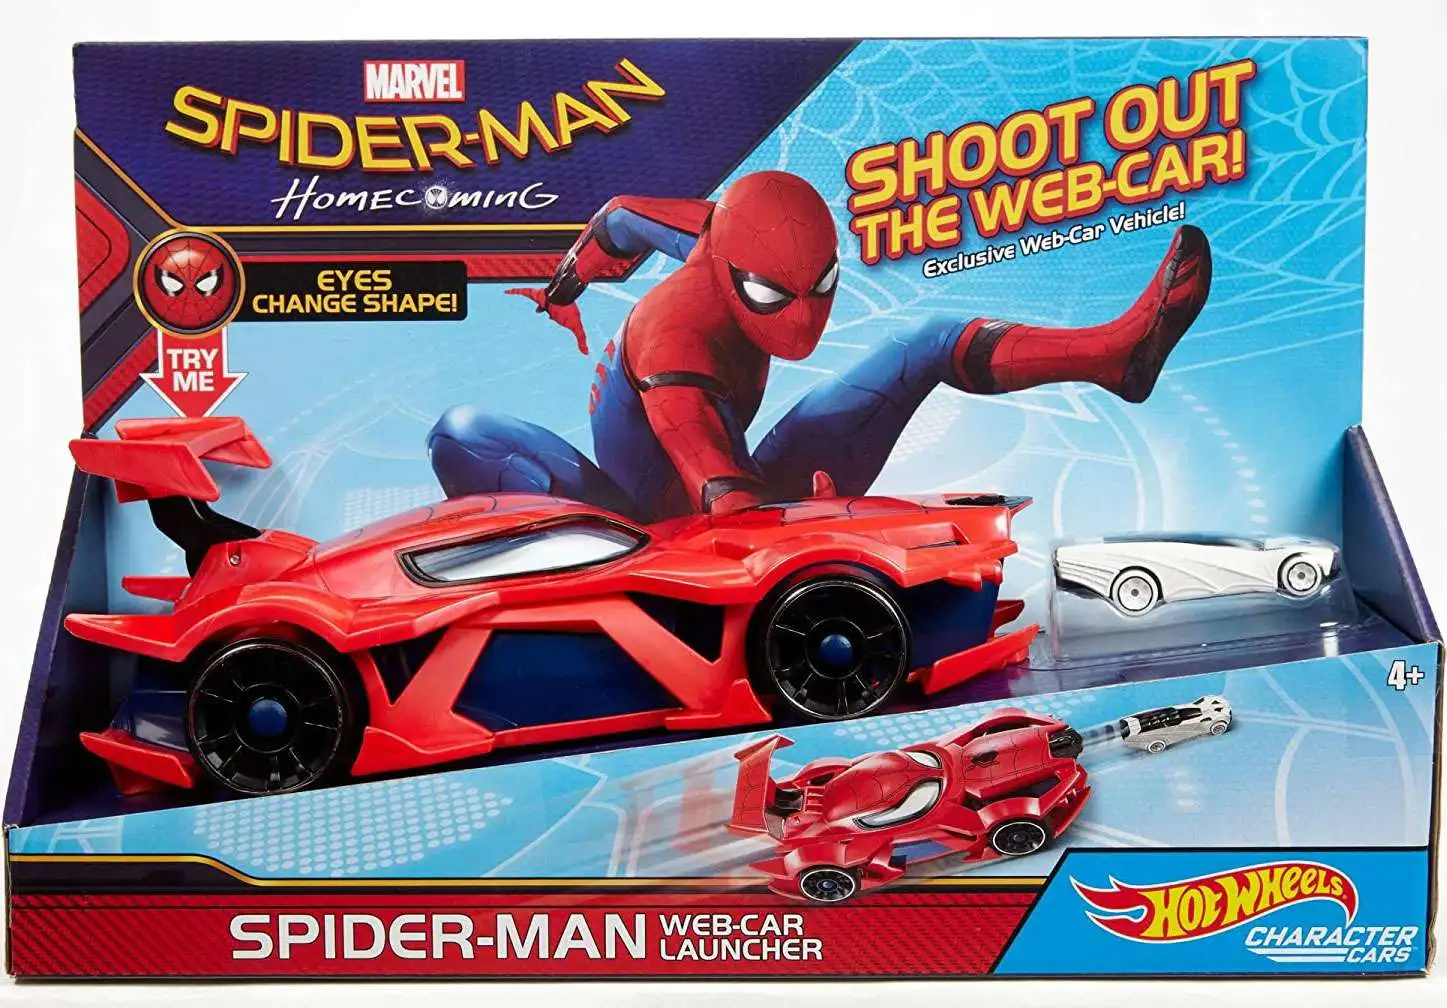 Mediador Lingüística Agresivo Marvel Spider-Man Homecoming Hot Wheels Web-Car Launcher Playset Mattel -  ToyWiz